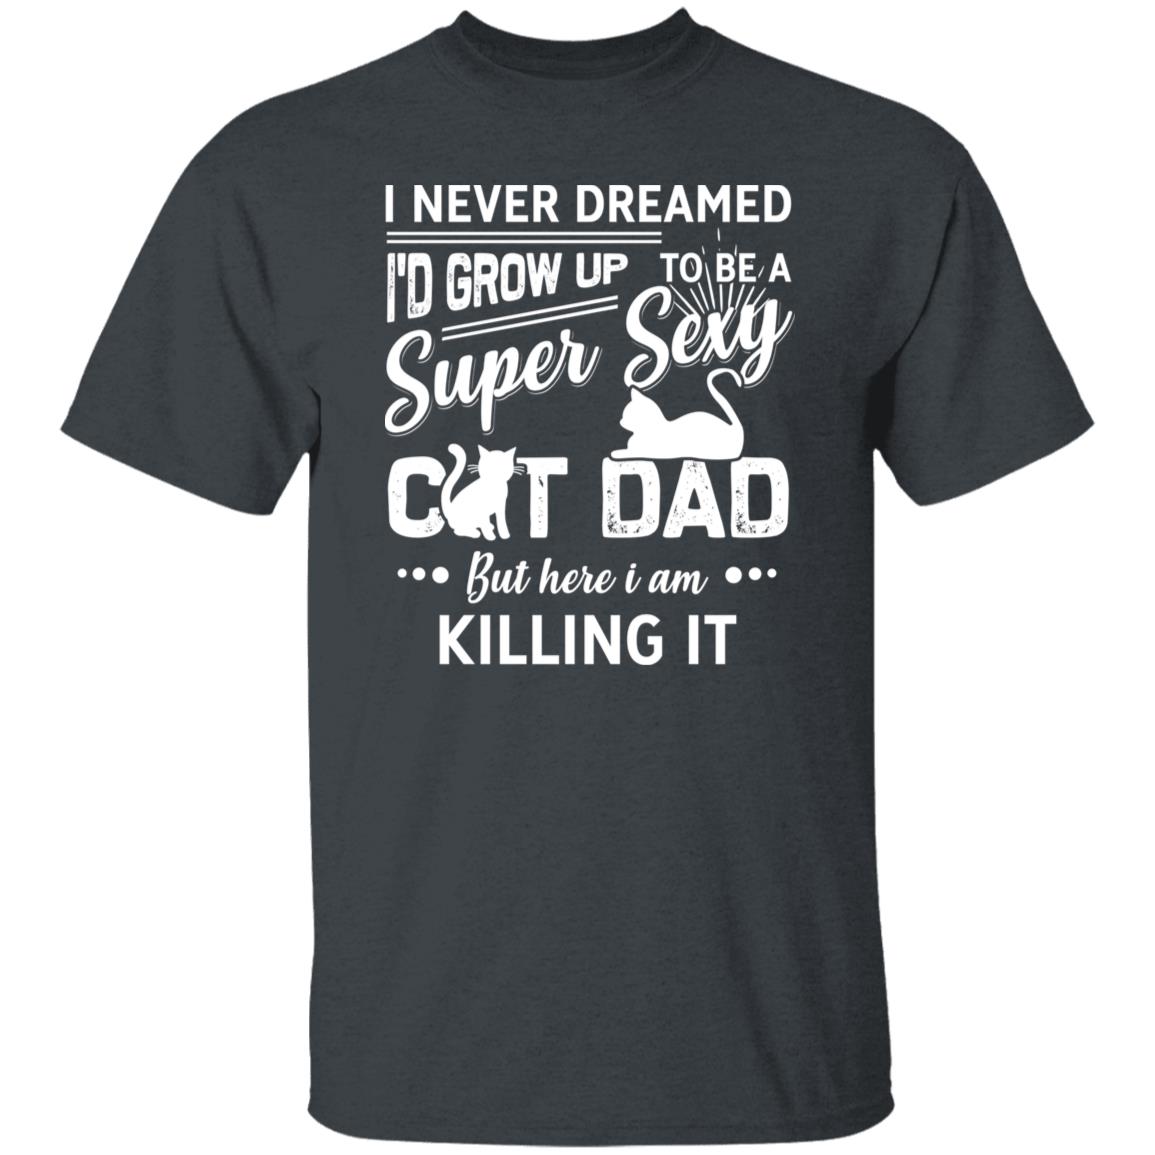 Super sexy cat dad T-Shirt gift Here I am killing it Cat dad Unisex Tee Black Navy Dark Heather-Dark Heather-Family-Gift-Planet